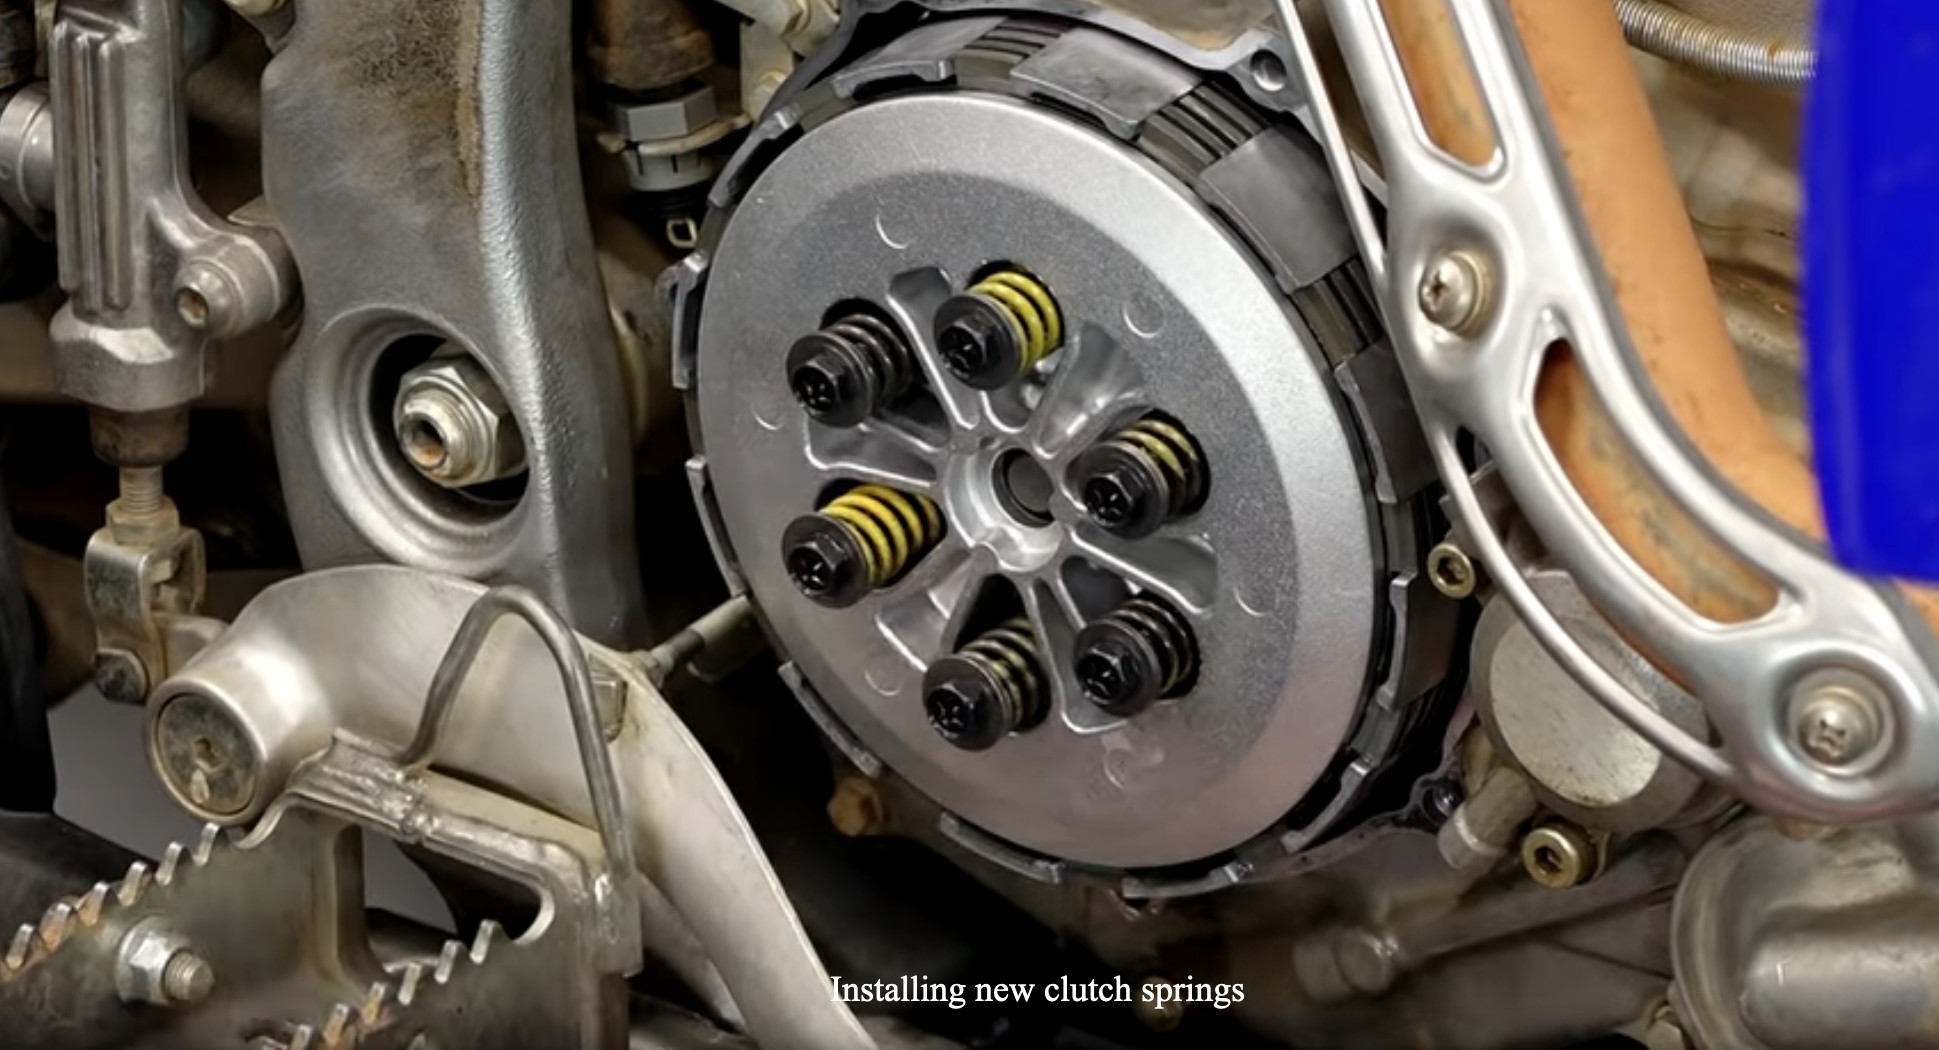 Yamaha ATV clutch rebuild